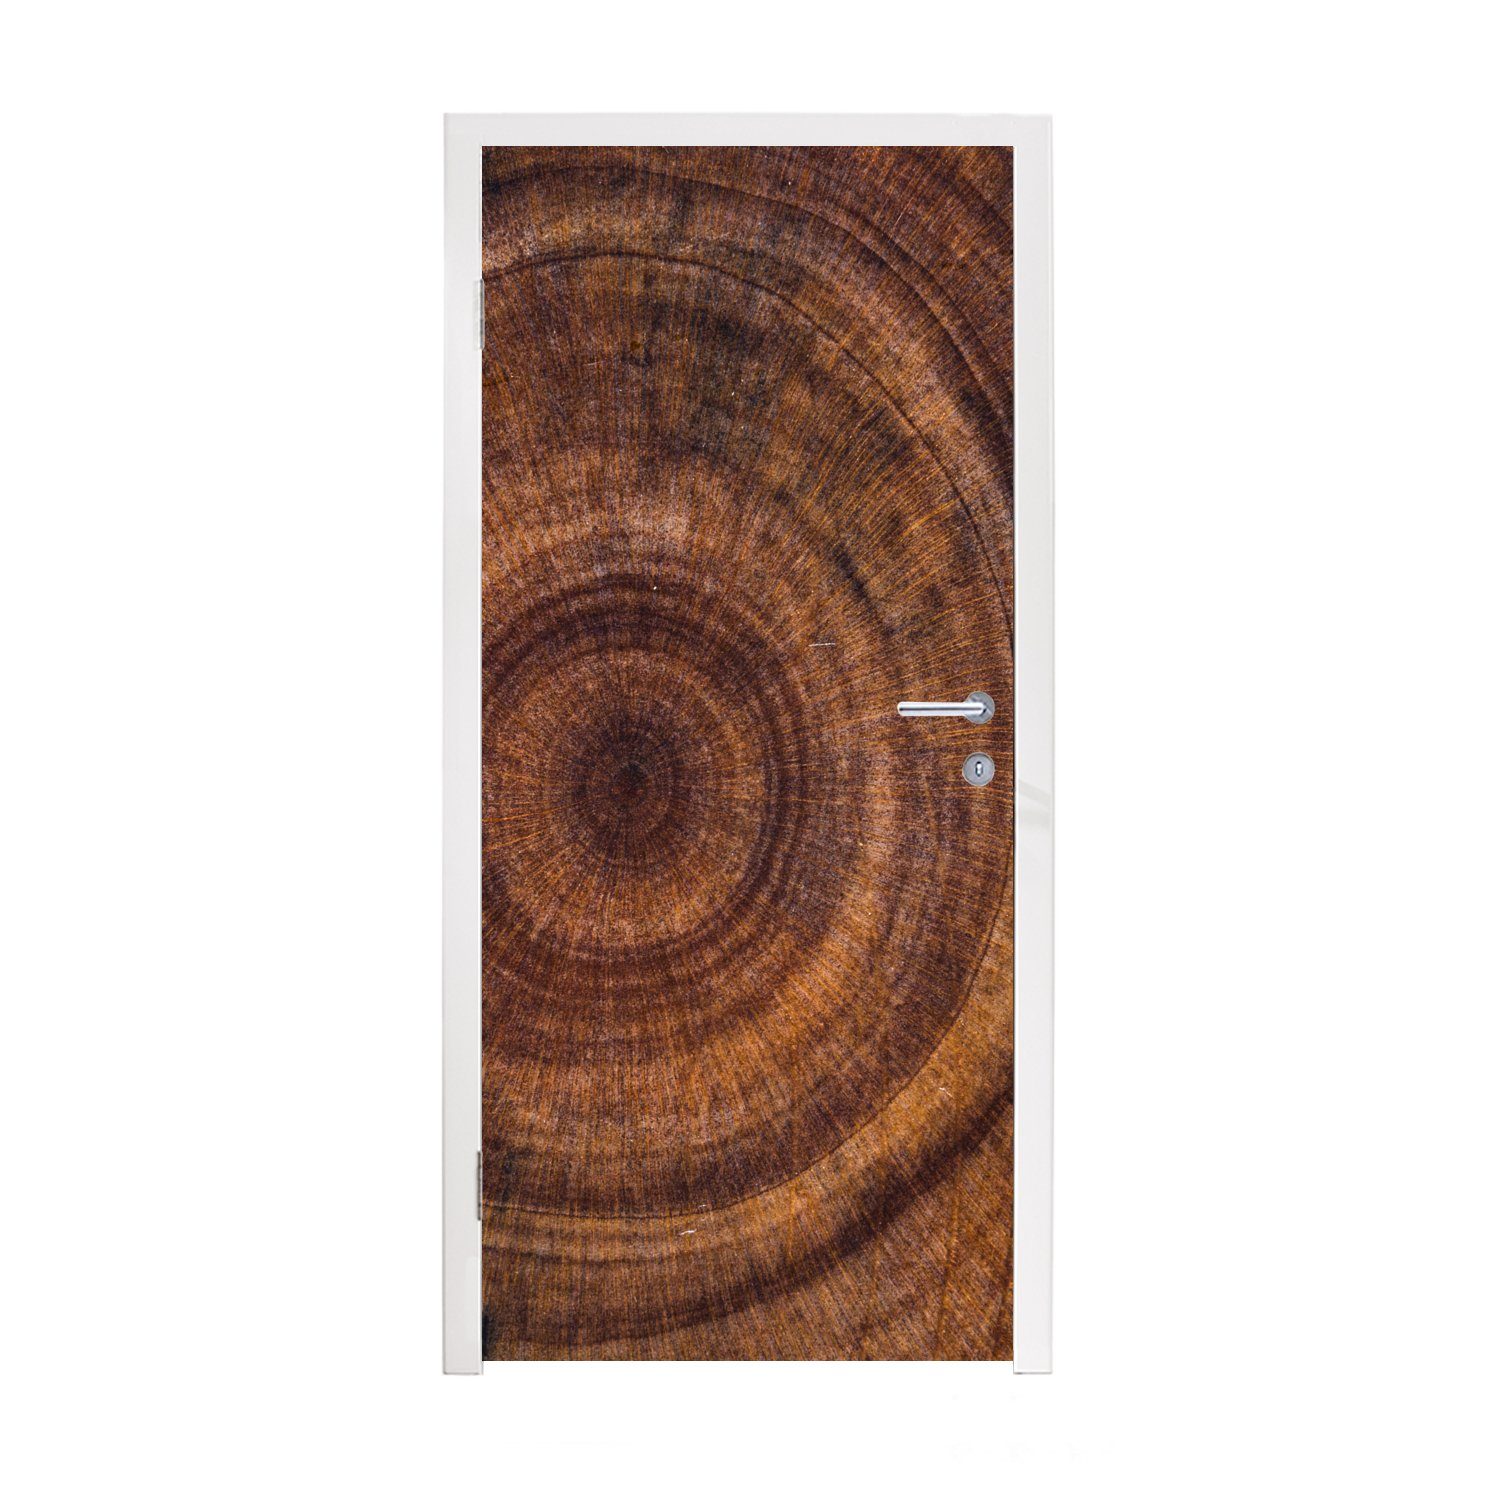 MuchoWow Türtapete Kreis - Holz für bedruckt, Türaufkleber, Ringe, 75x205 cm Matt, Tür, - St), (1 Fototapete